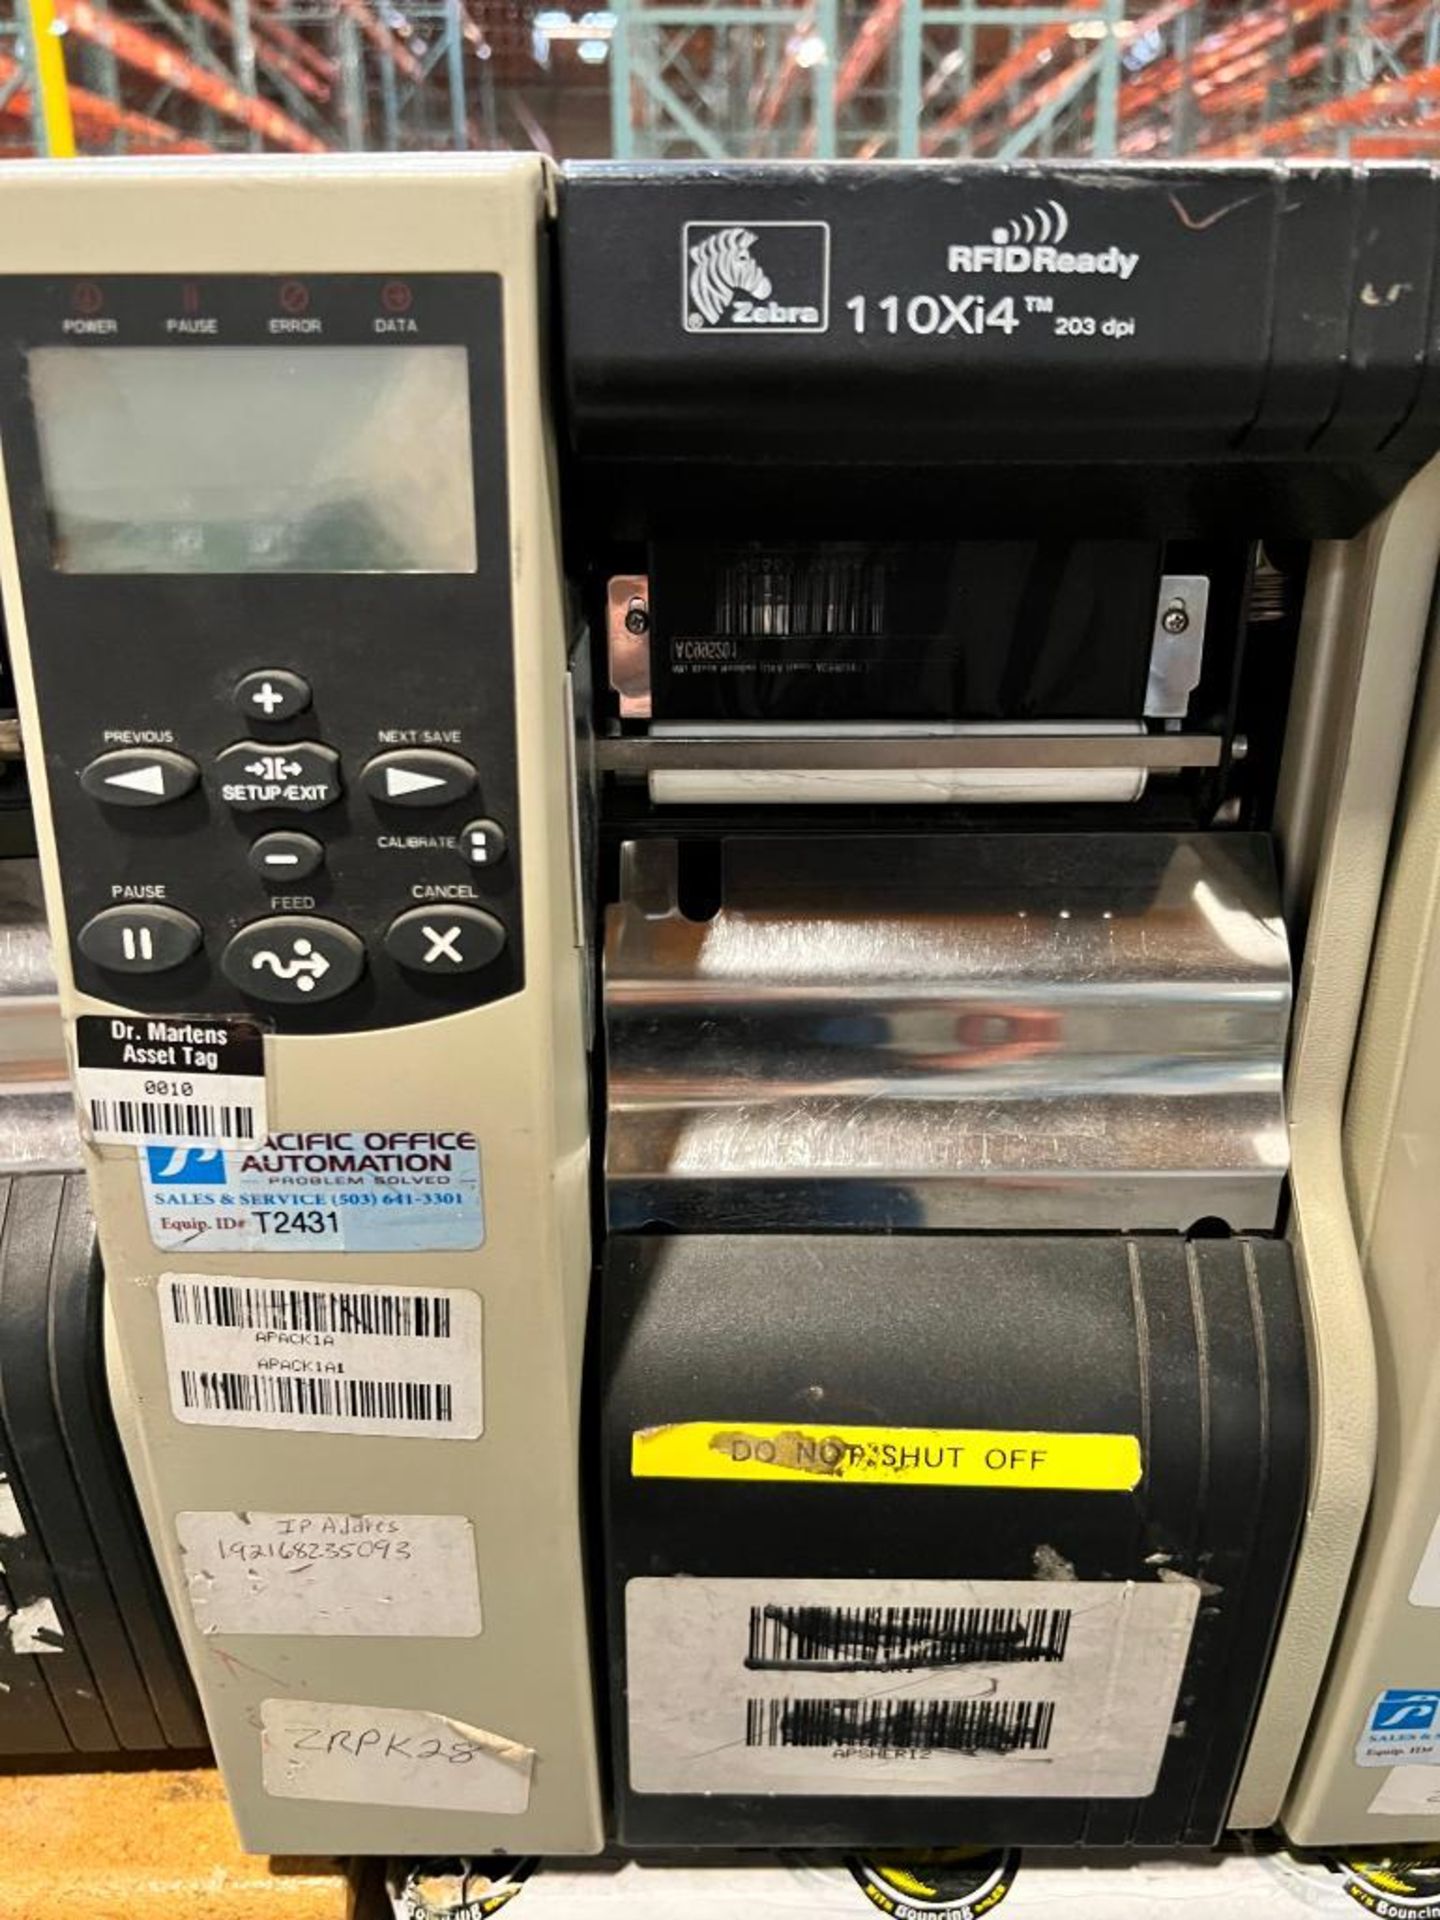 (2) Zebra Printers, Model 110XI4, RFID Ready - Image 2 of 3